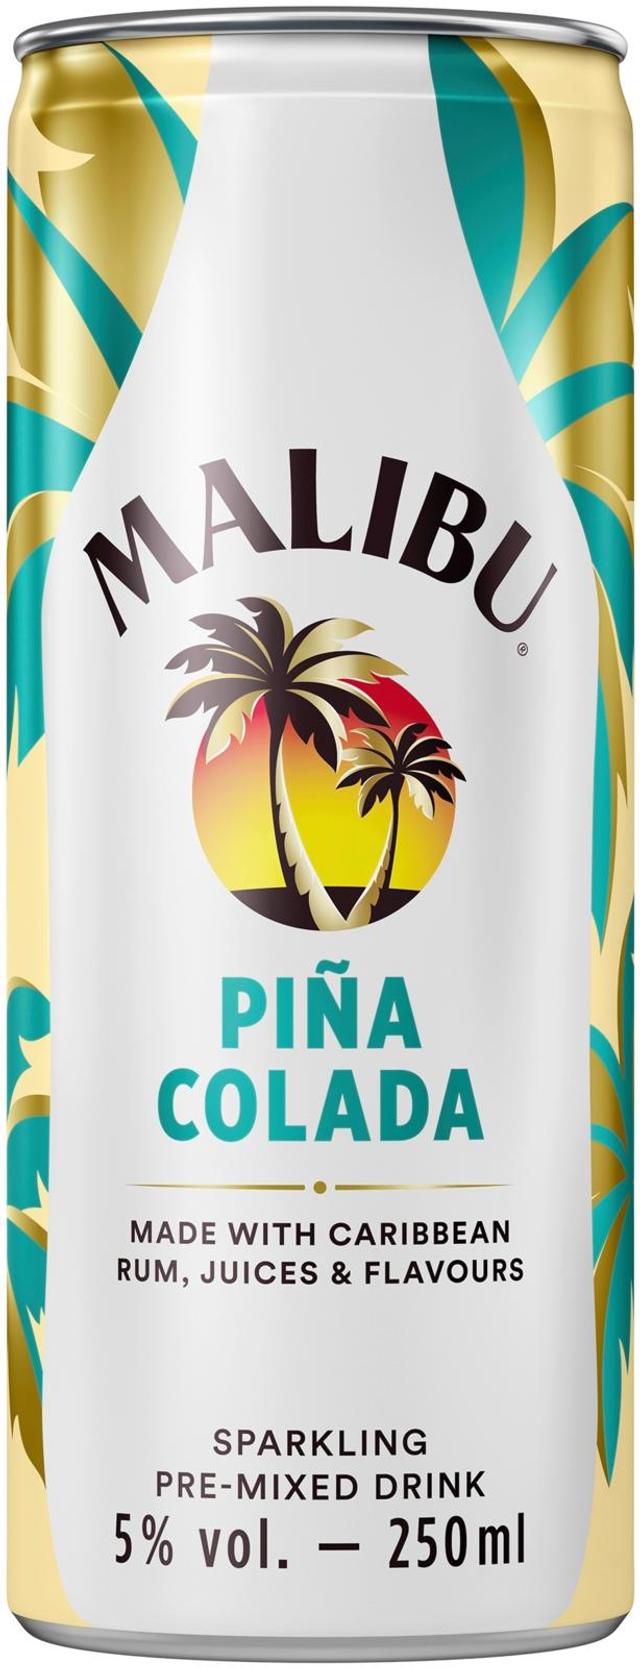 Malibu Pina Colada 5% 250ml